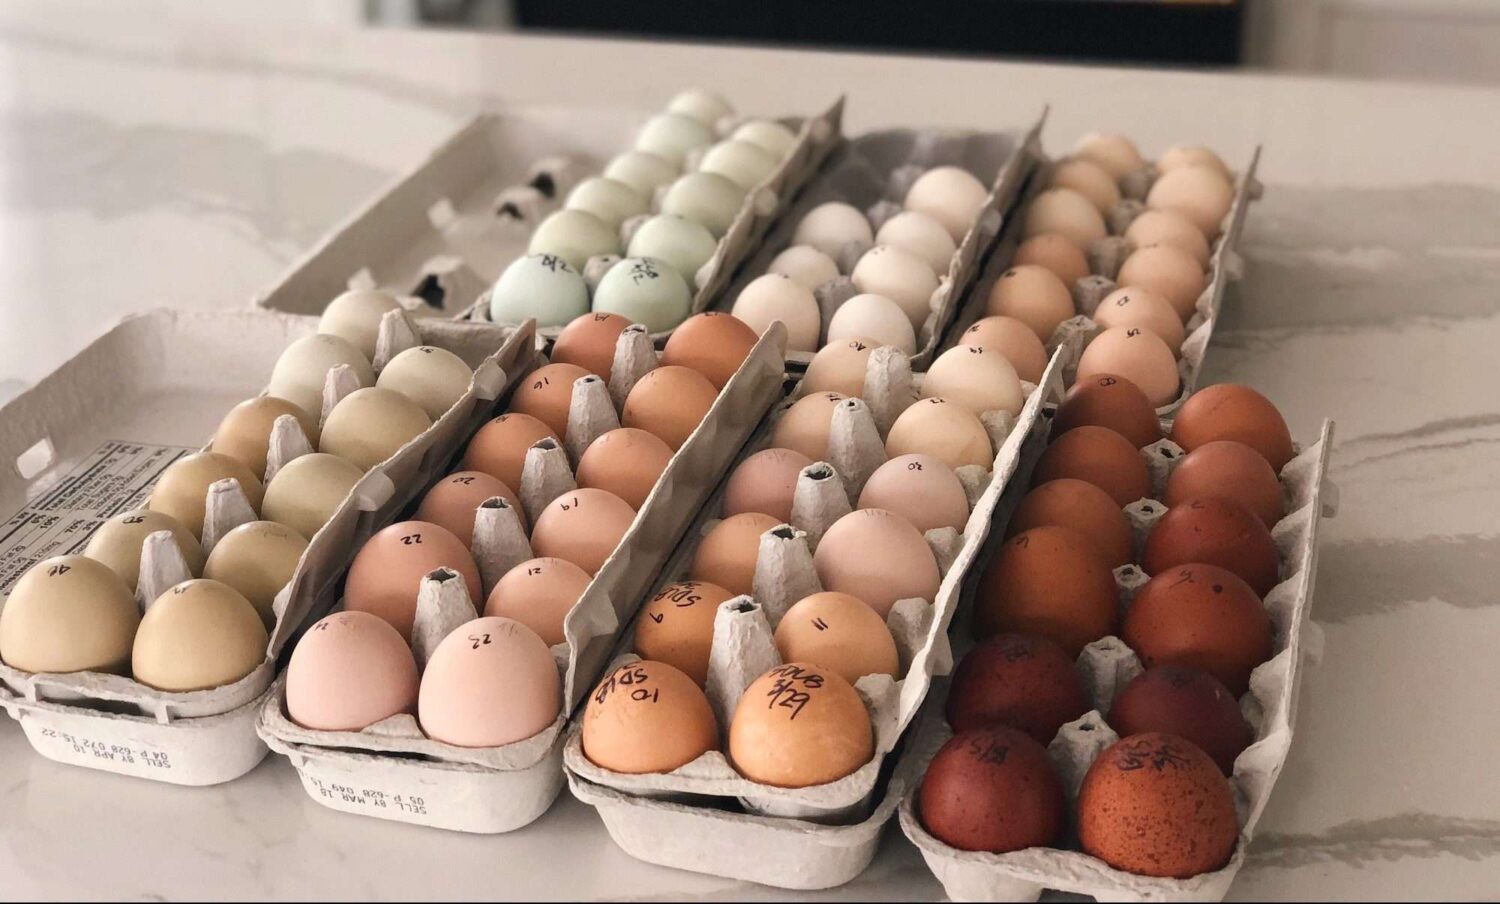 7 dozen colorful hatching eggs sitting on kitchen counter